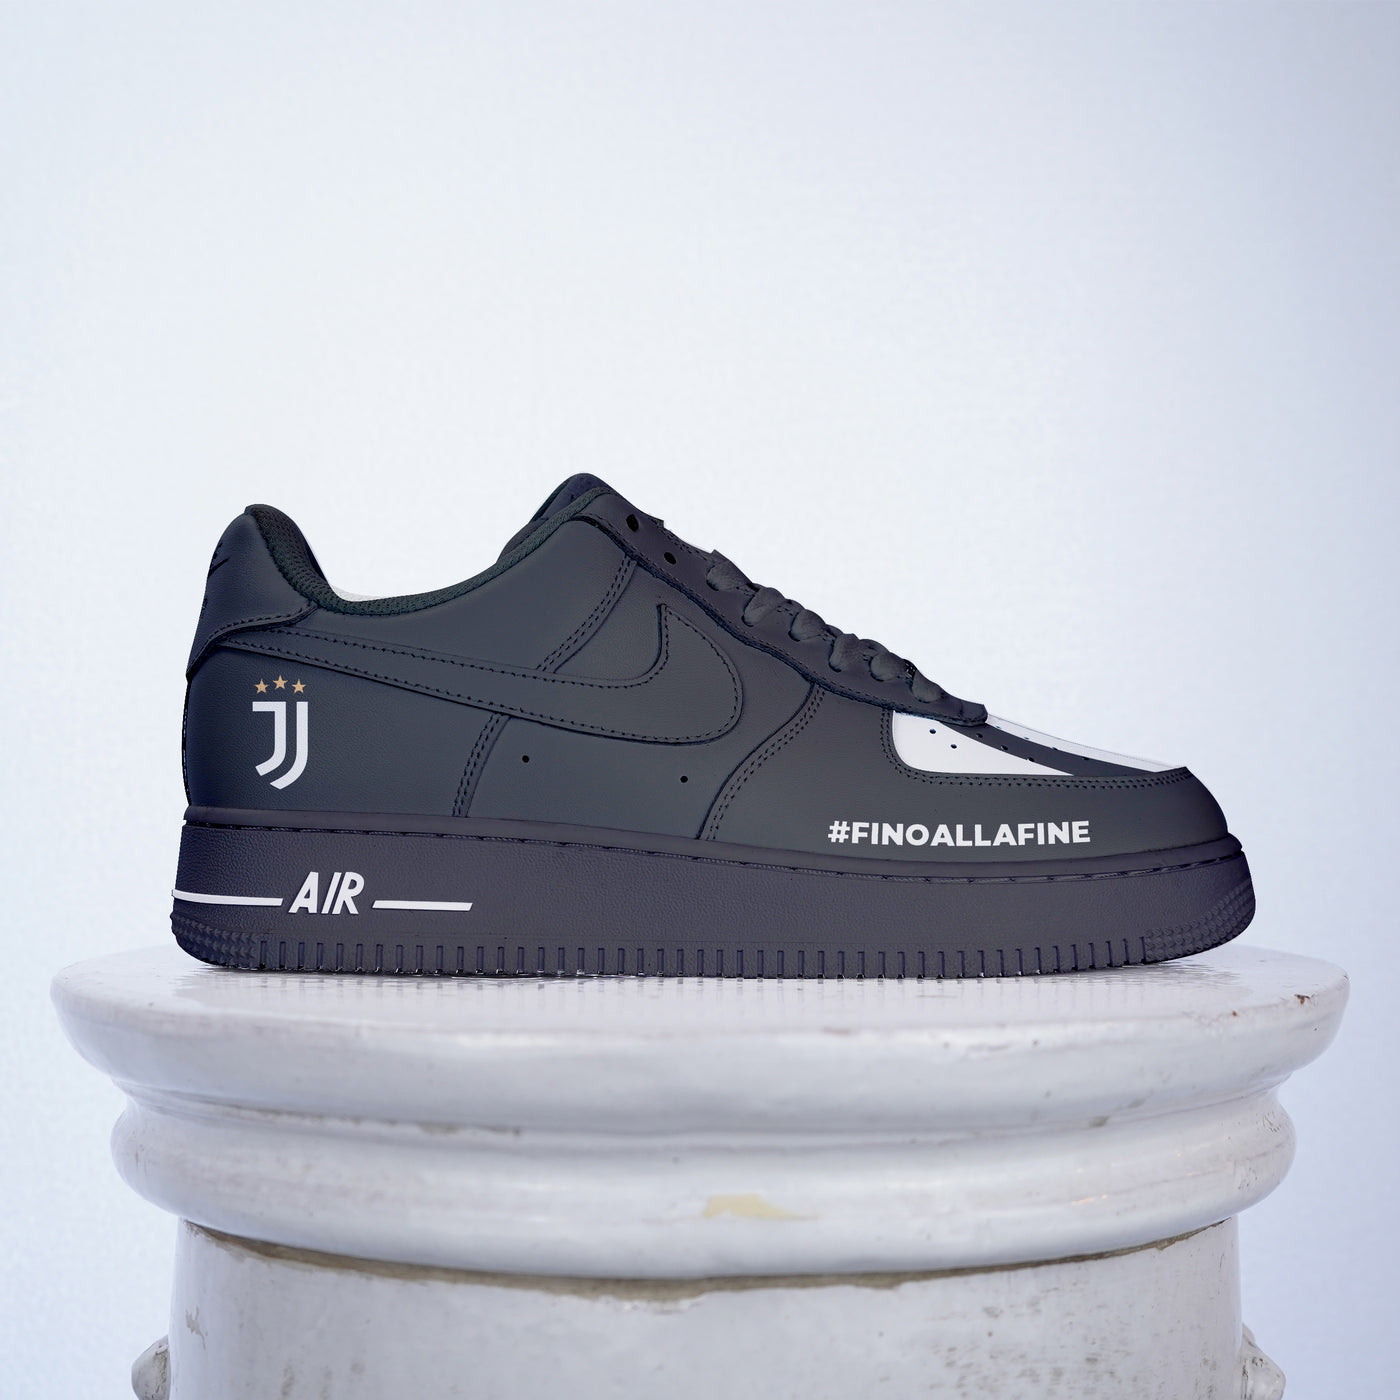 Juventus sneakers